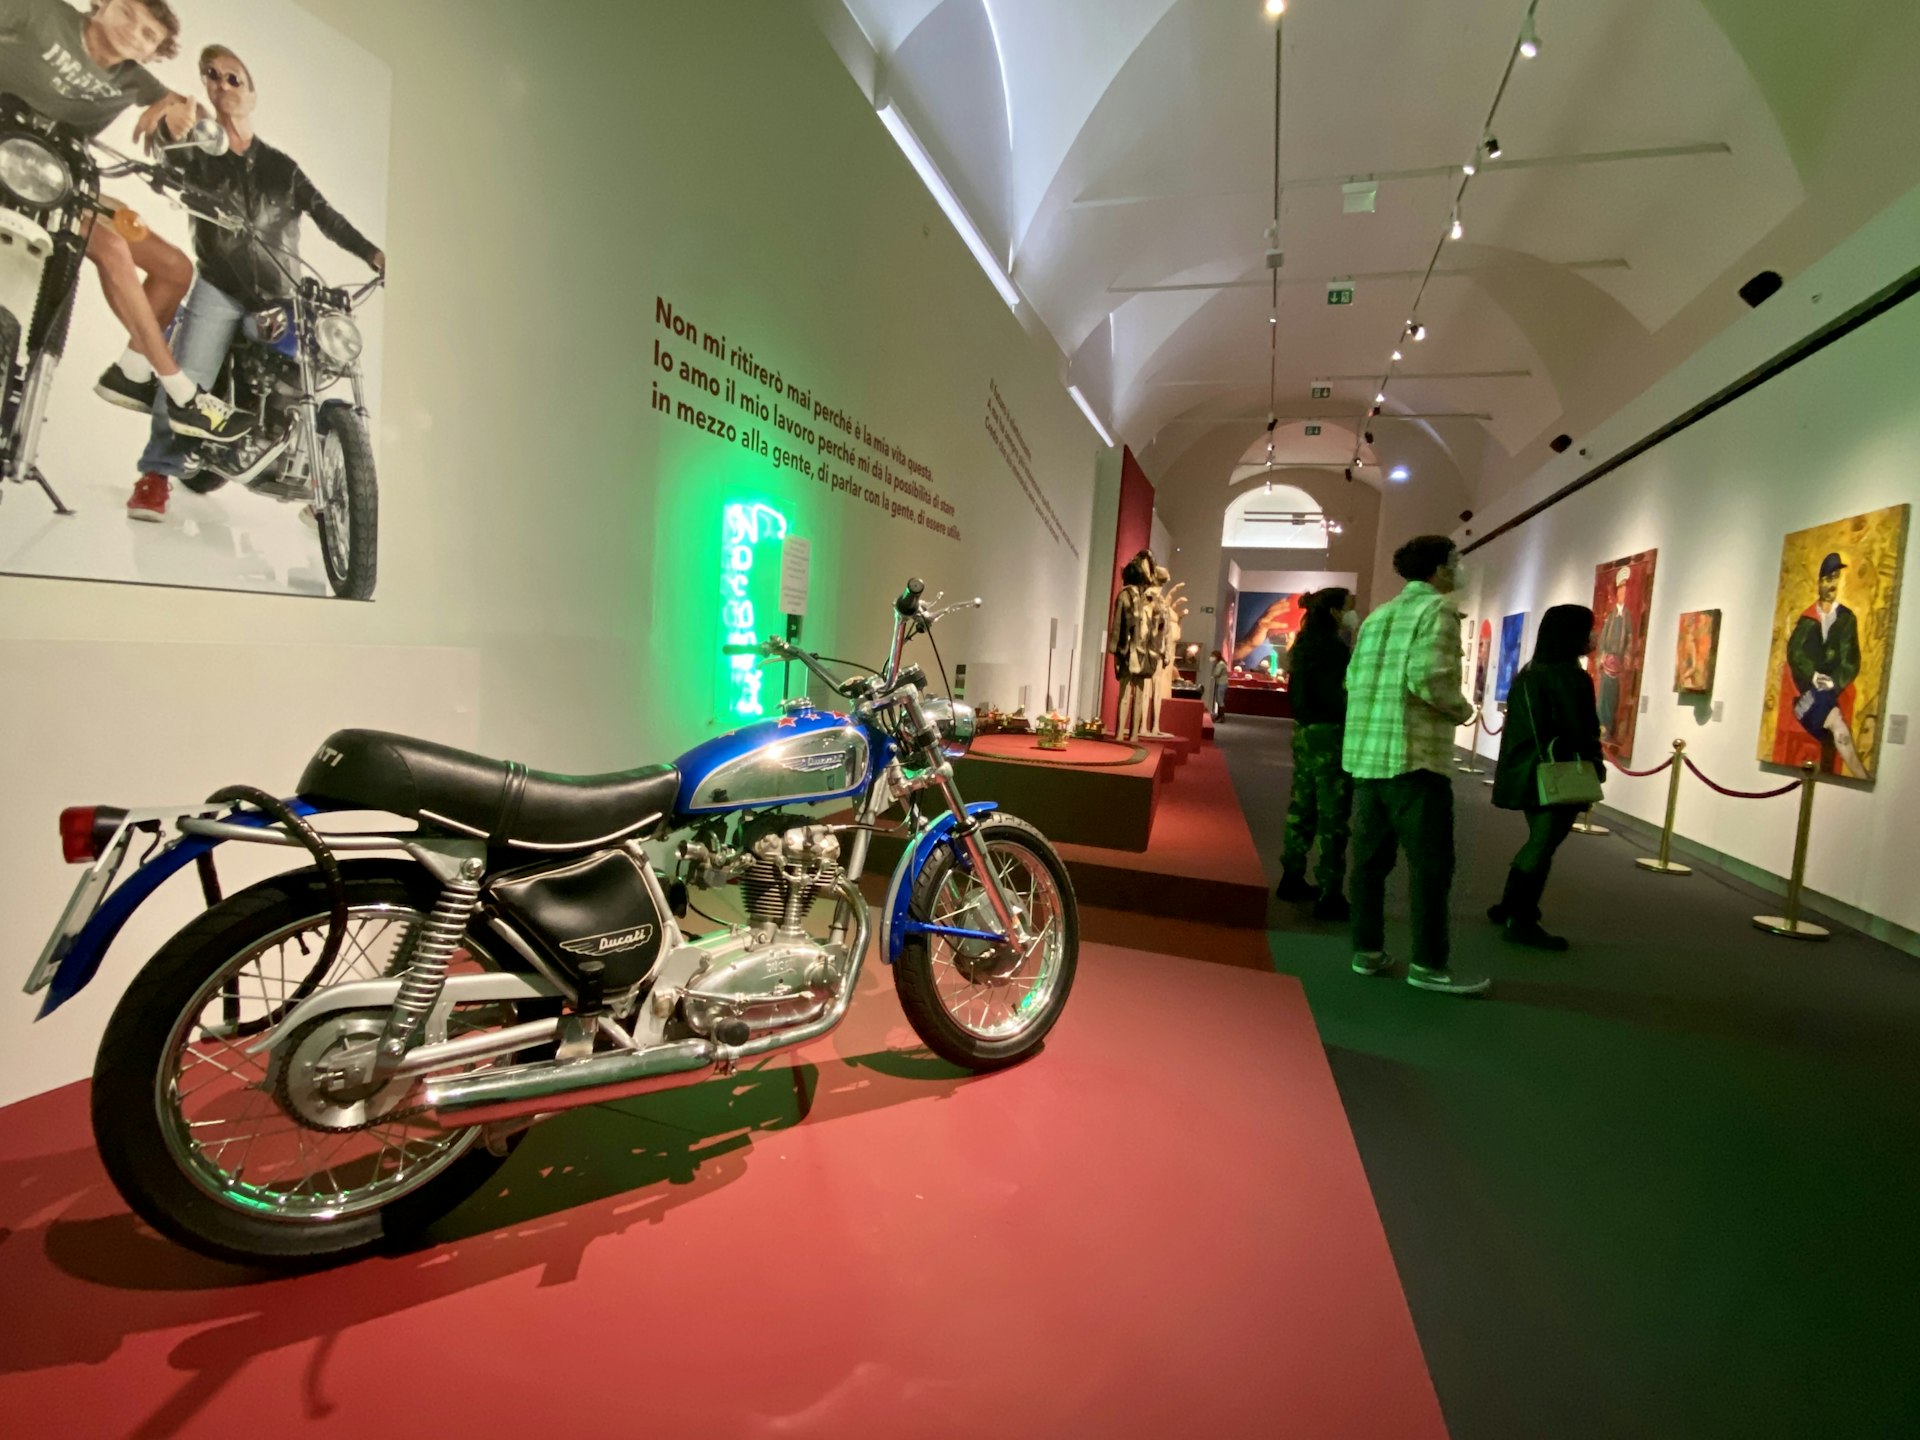 Lucio Dalla's motorcycle, on display at the Lucio Dalla exhibit